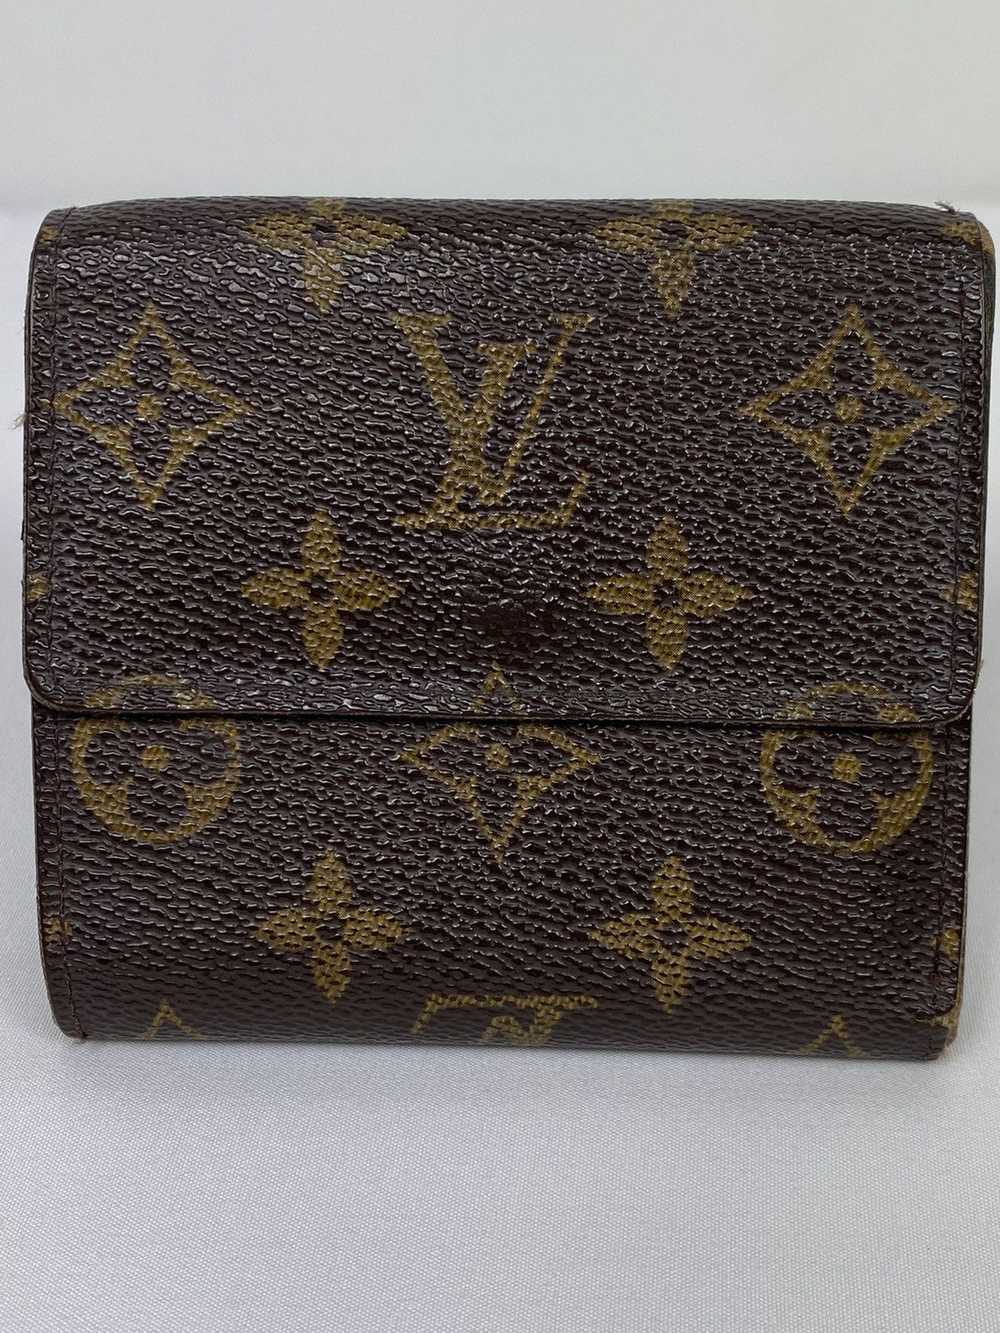 Louis Vuitton Monogram Trifold Wallet - image 2